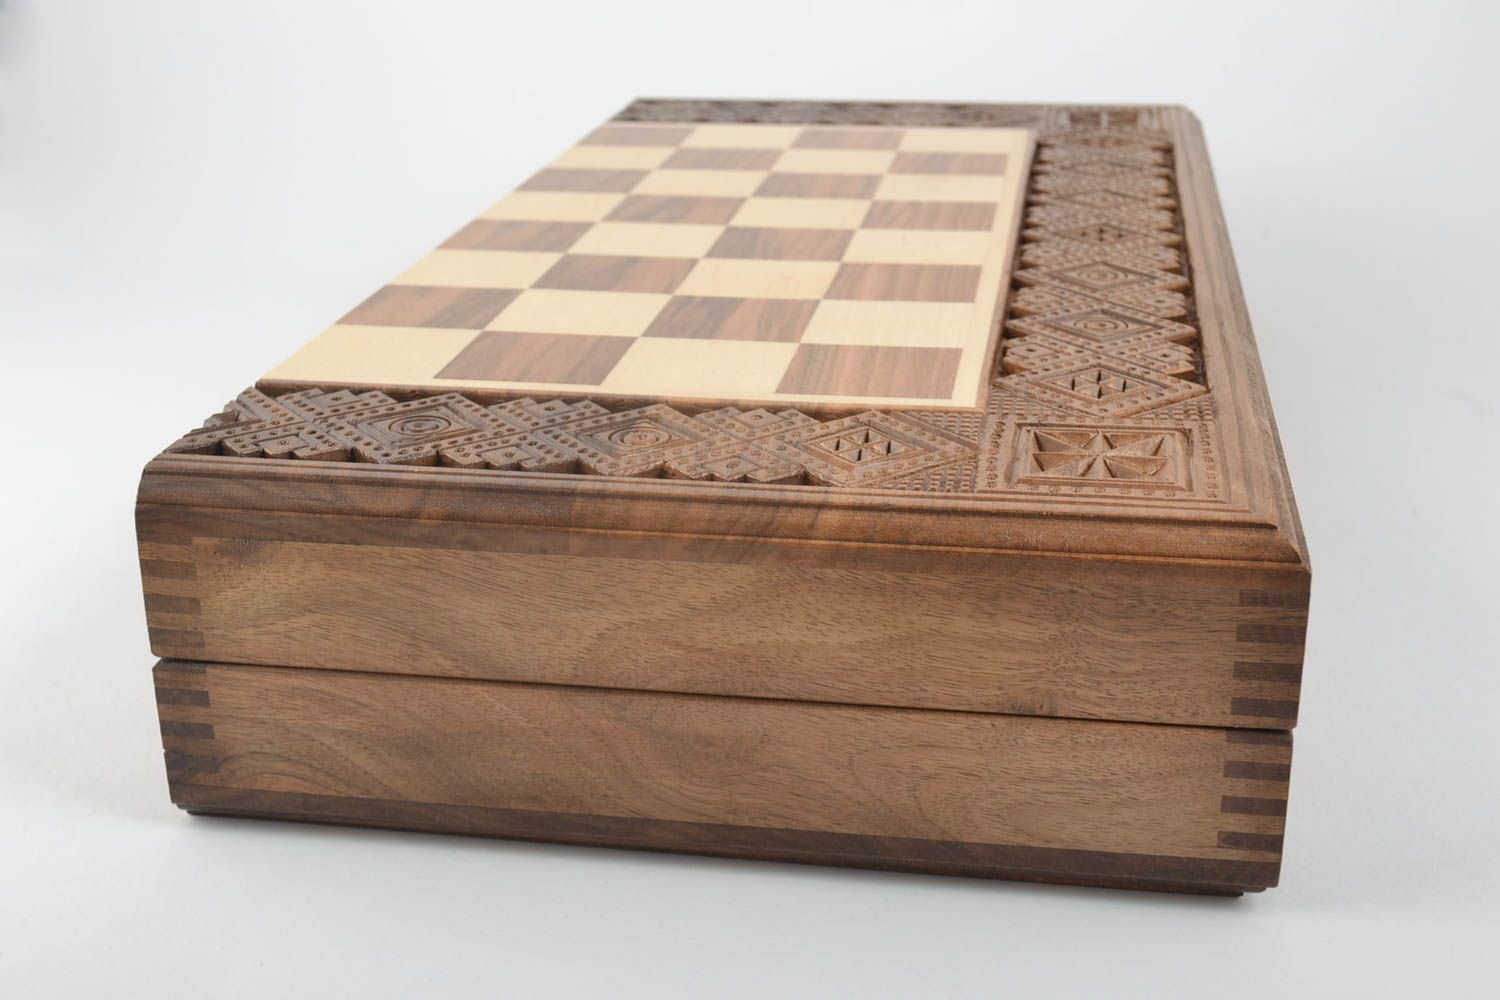 Unusual handmade wooden chessboard wood craft chess board design board games photo 1